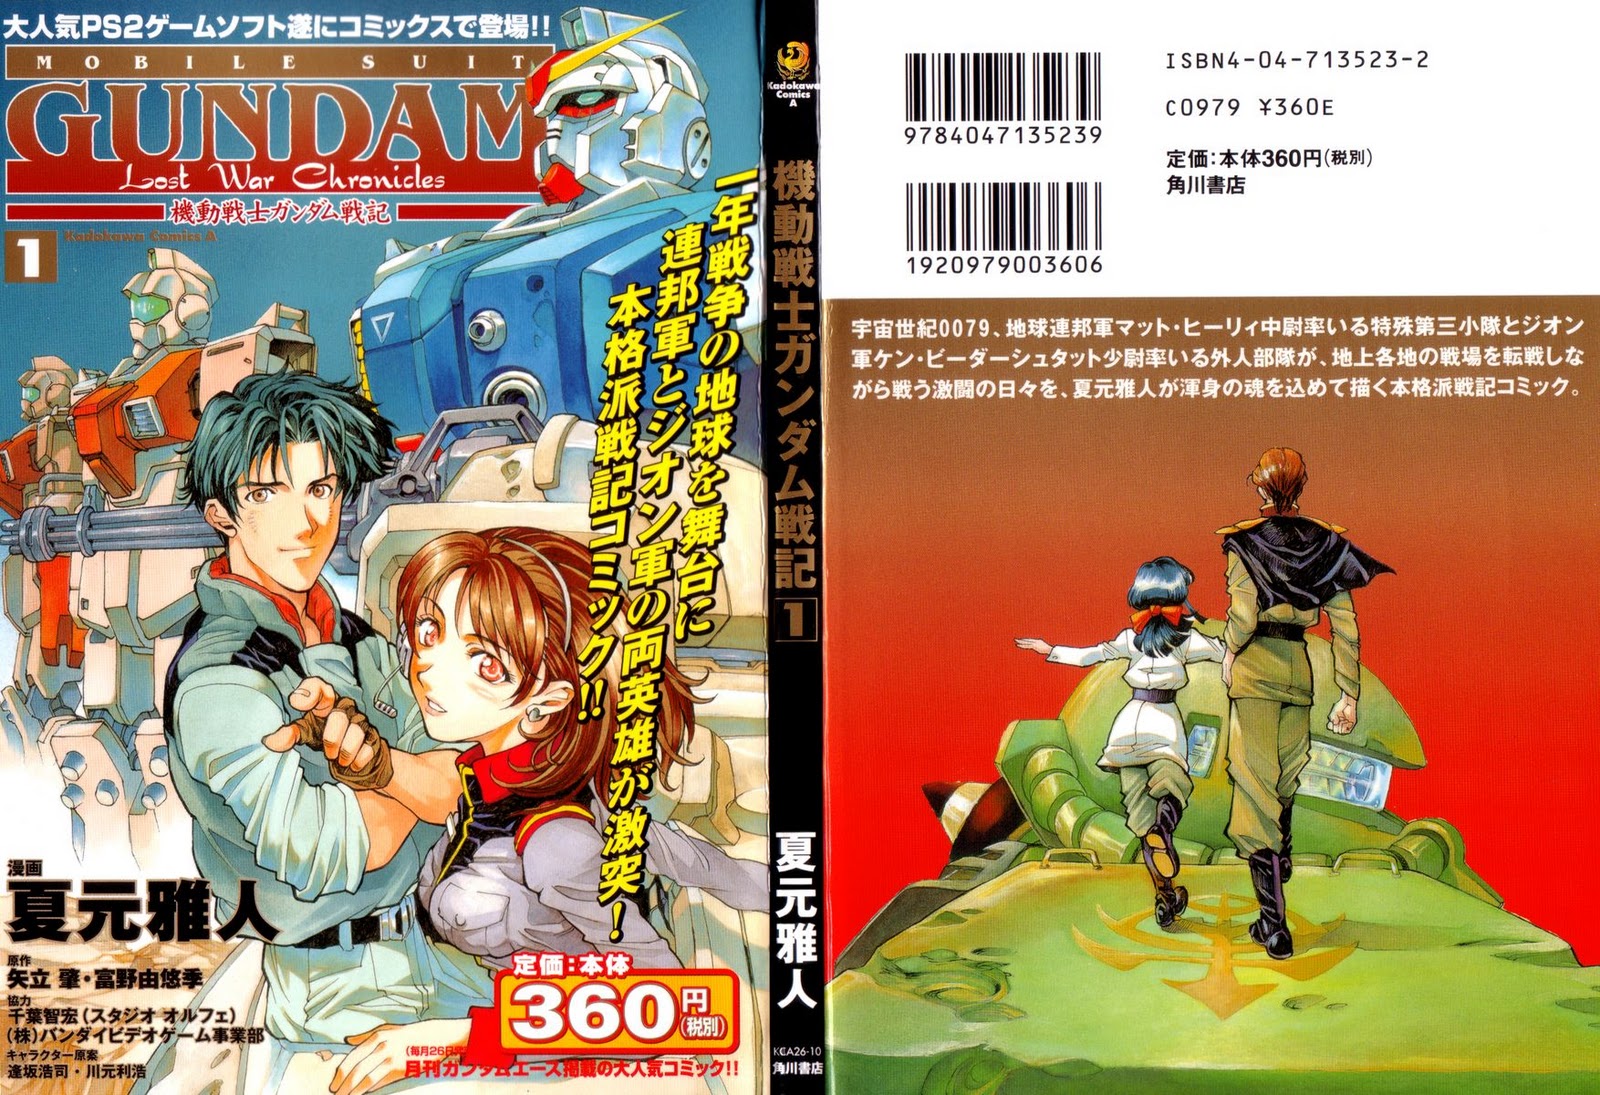 Juegos MS Gundam Psx-Ps2 GUNDAM+Last+War+Chronicles+01-000-a